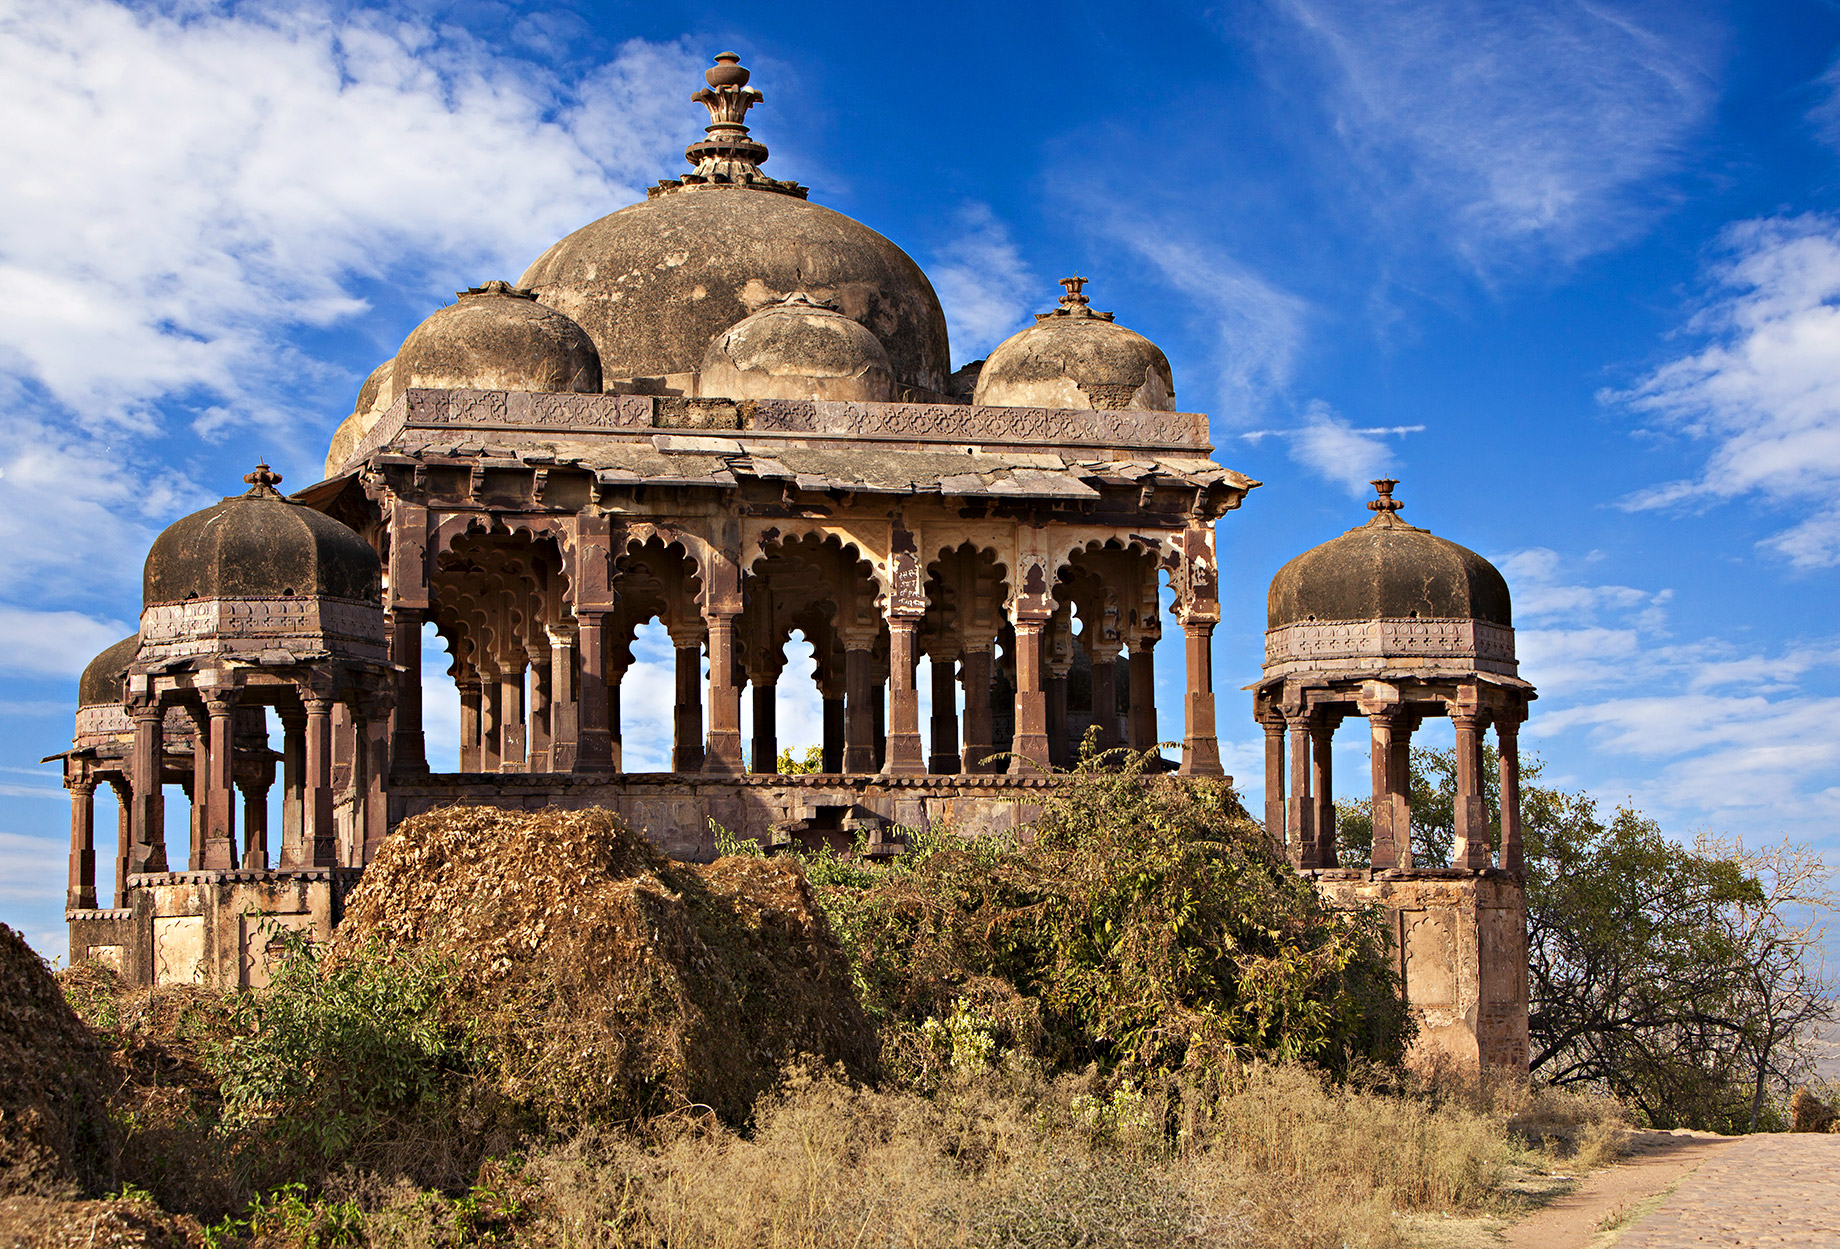 Fort in Ranthambore National Park - Sawai Madhopur, Rajasthan, India